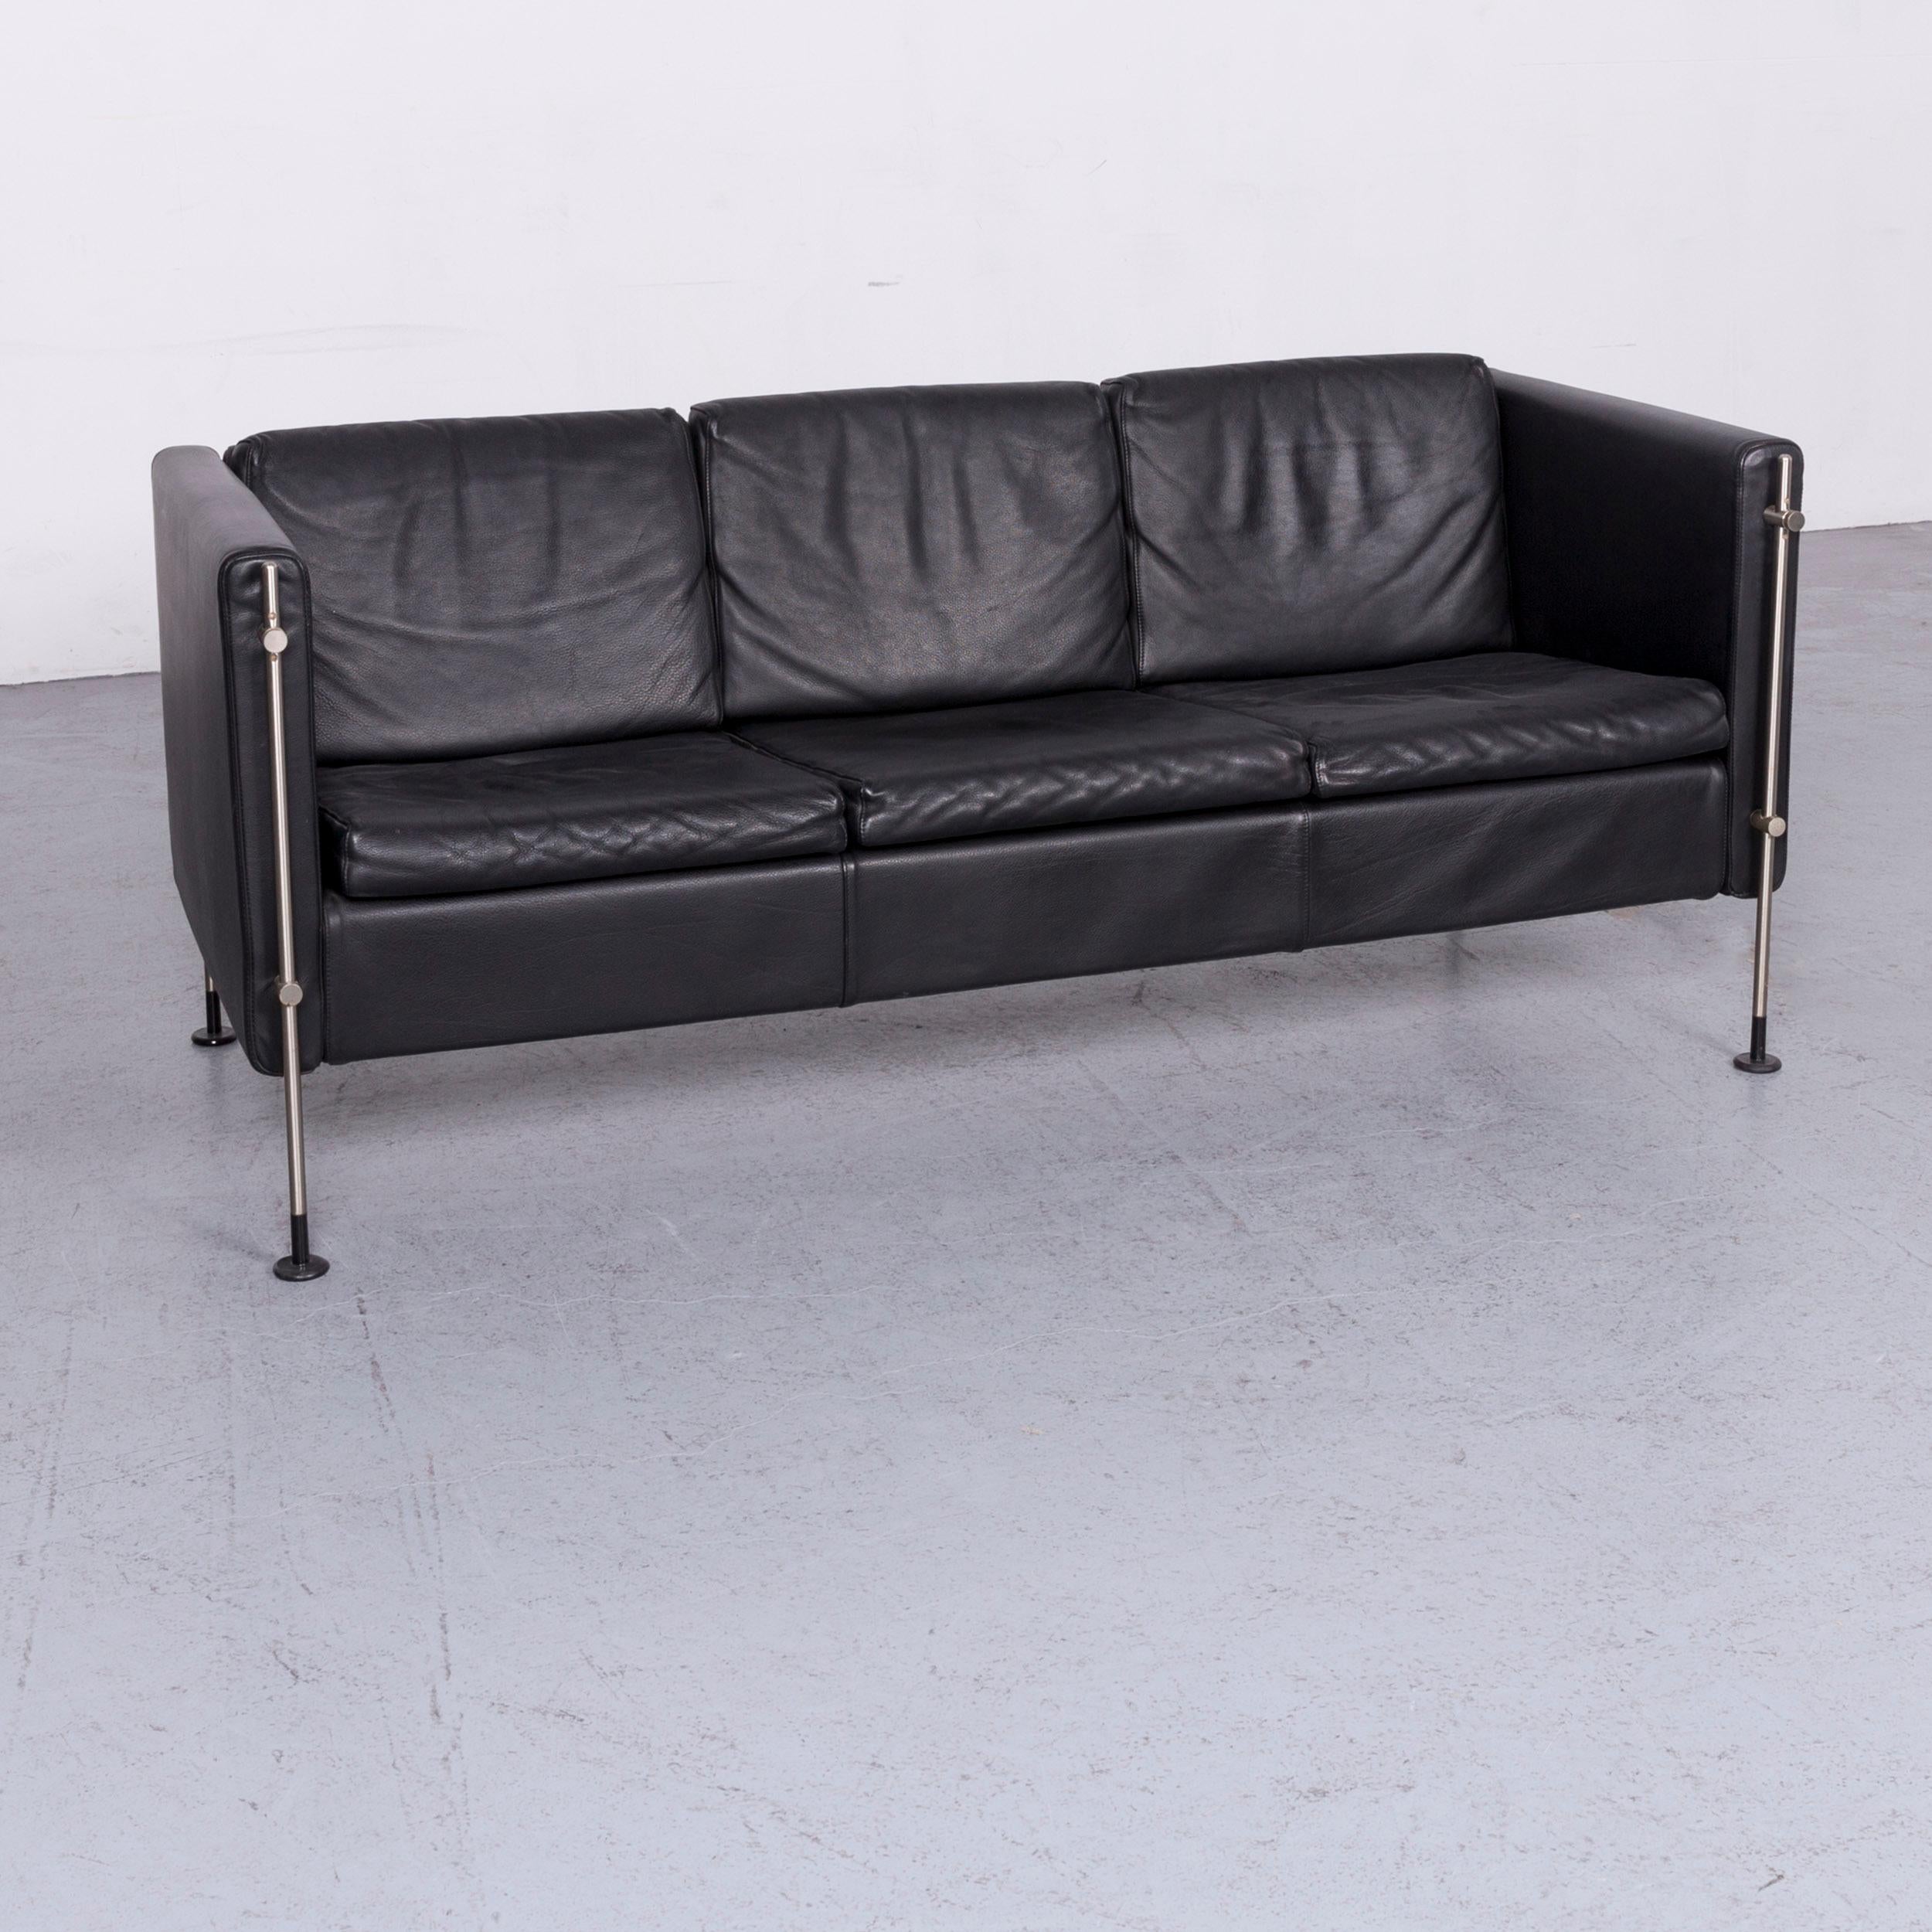 We bring to you a Arflex Felix leather sofa black three-seat chair.

































